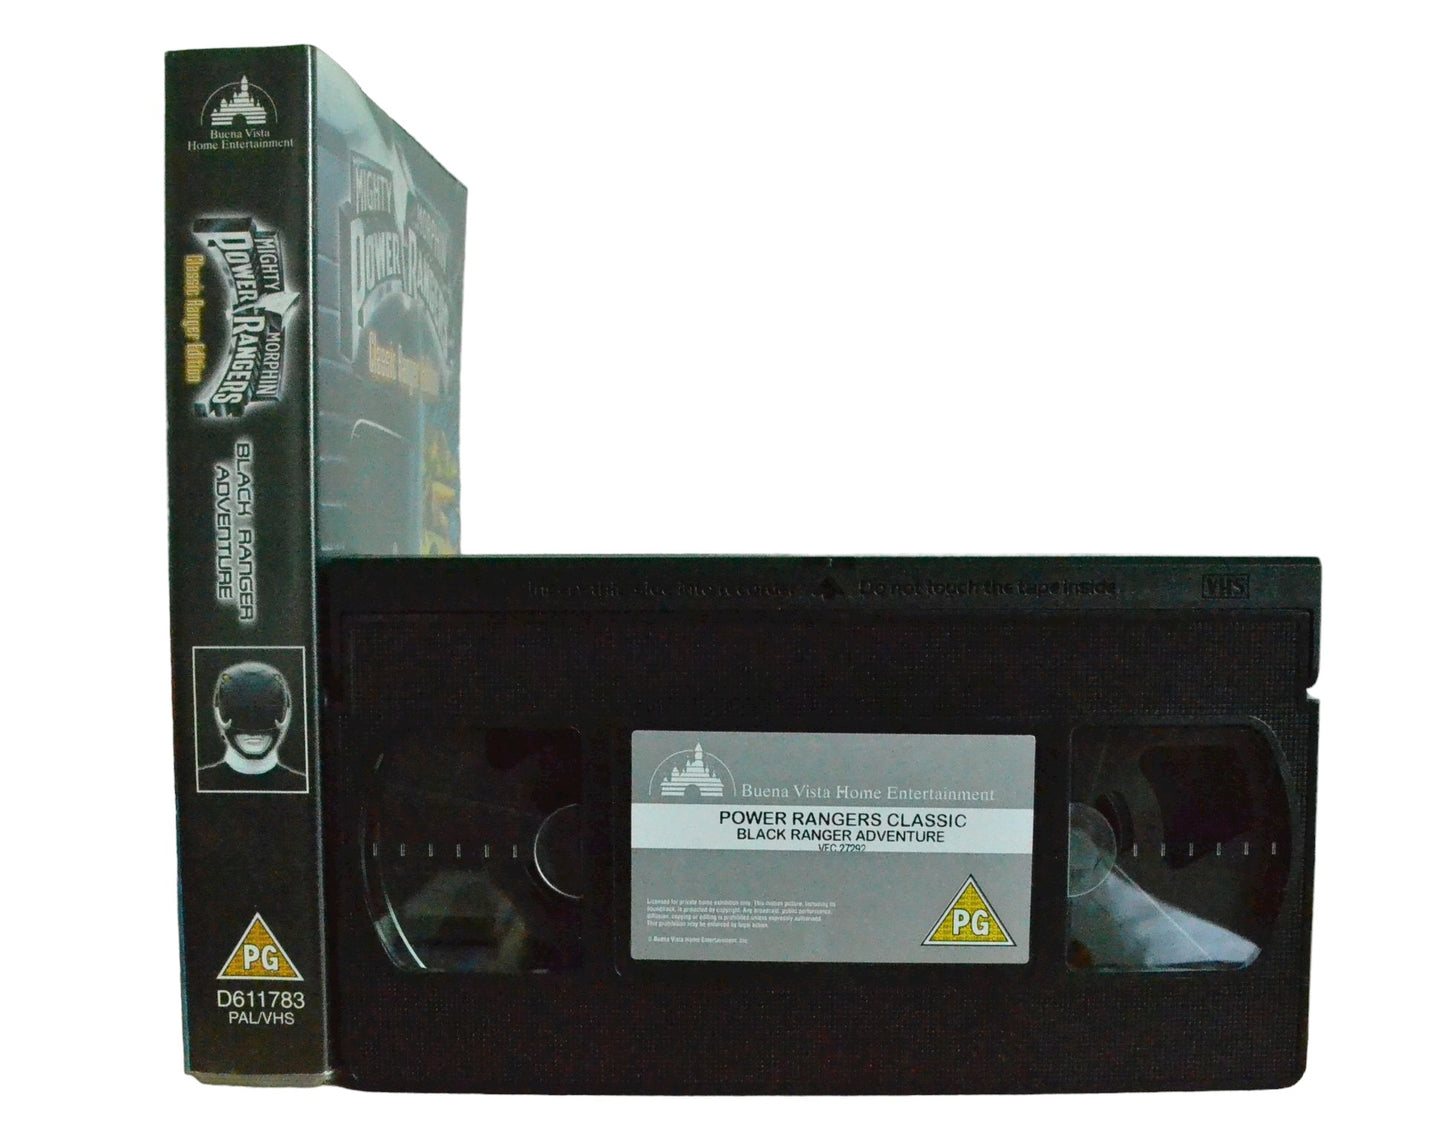 Mighty Morph 'N Power Rangers - Classic Ranger Edition - Buena Vista Home Entertainment - Childrens - Pal VHS-